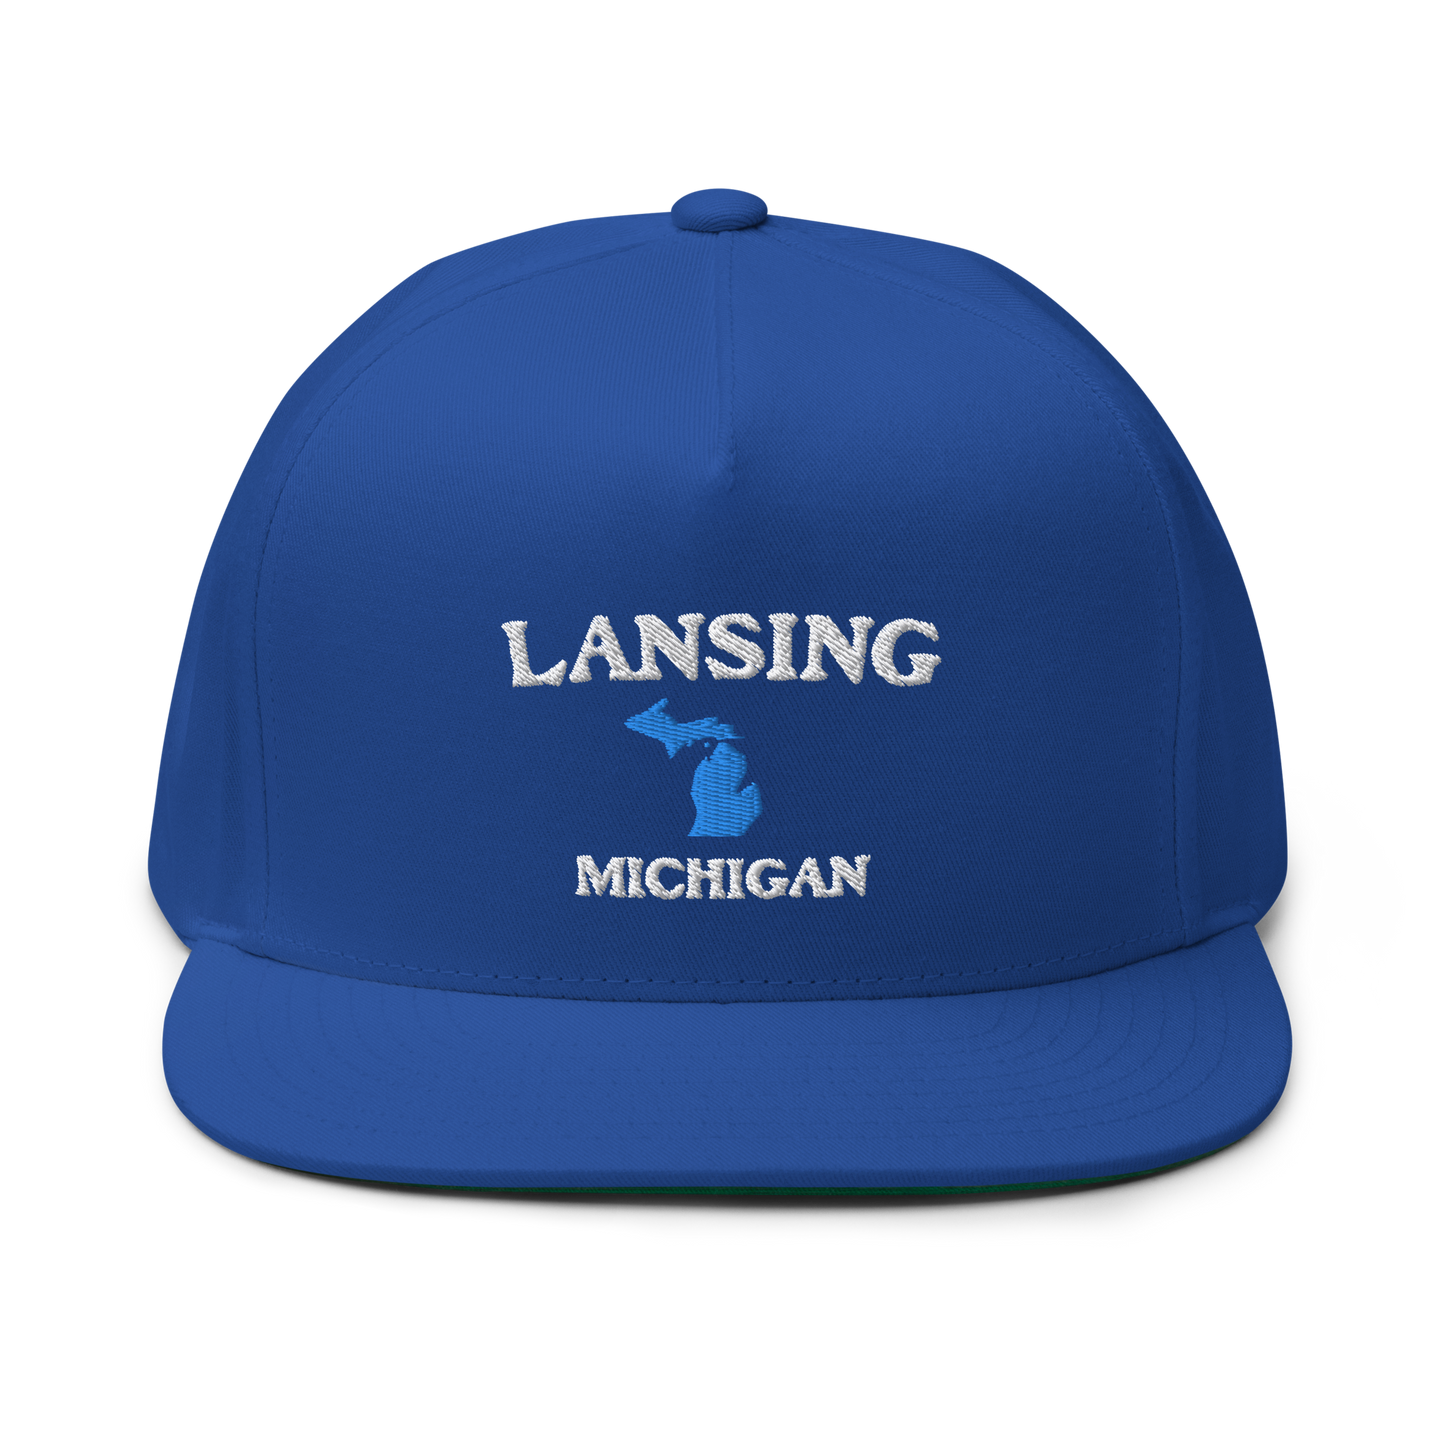 'Lansing Michigan' Flat Bill Snapback (w/ Michigan Outline)